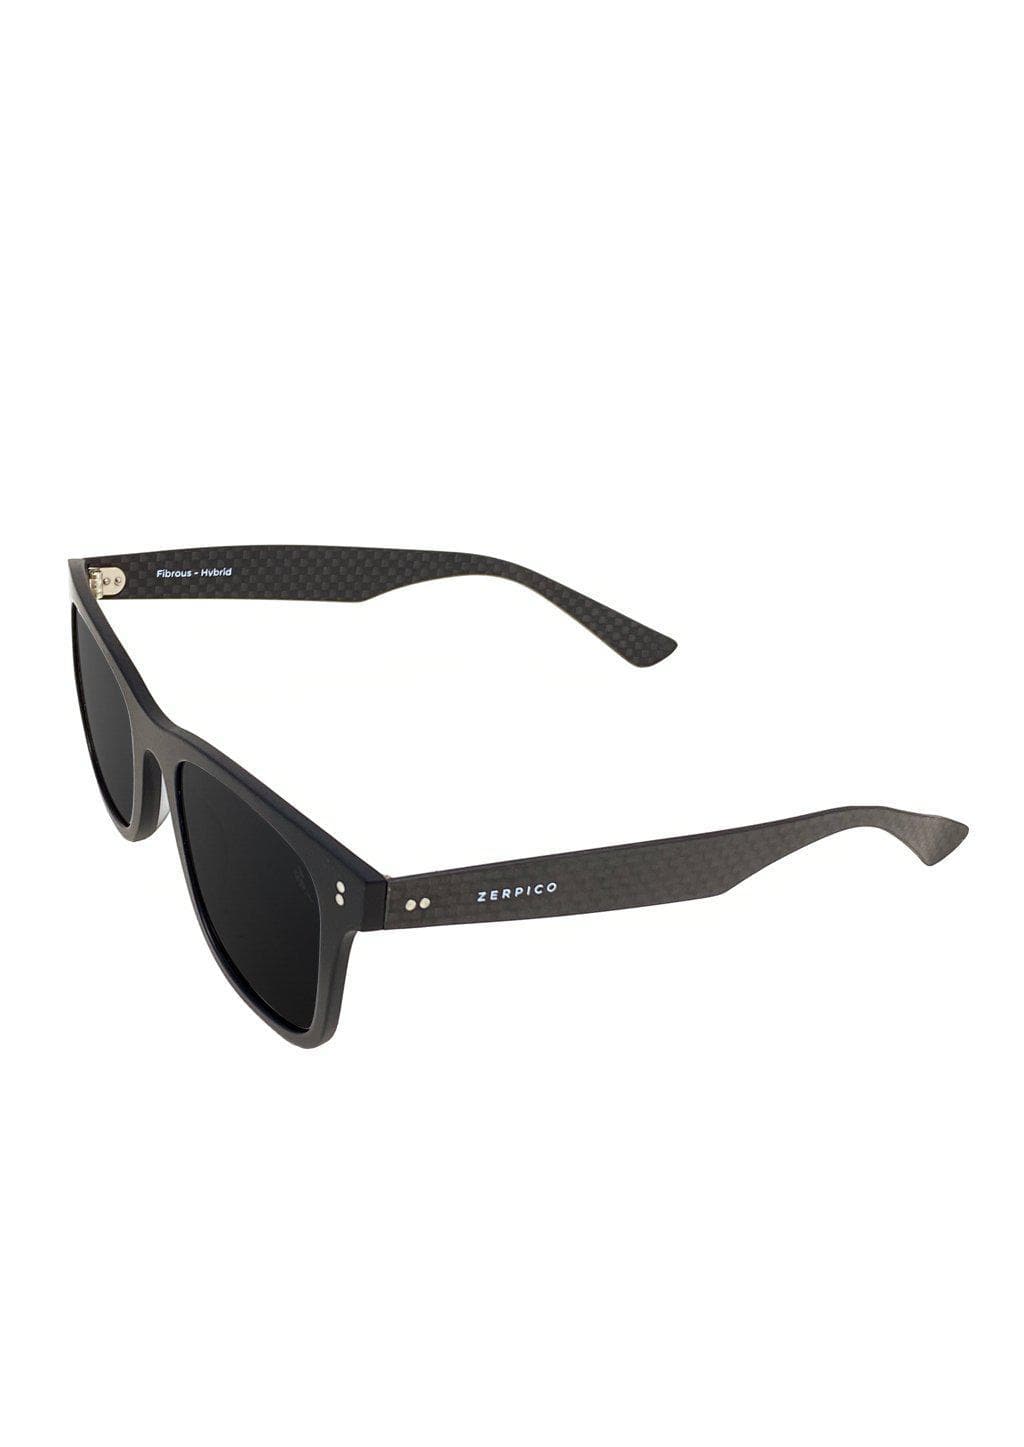 Hybrid Atom Carbon Fiber & Acetate Sunglasses